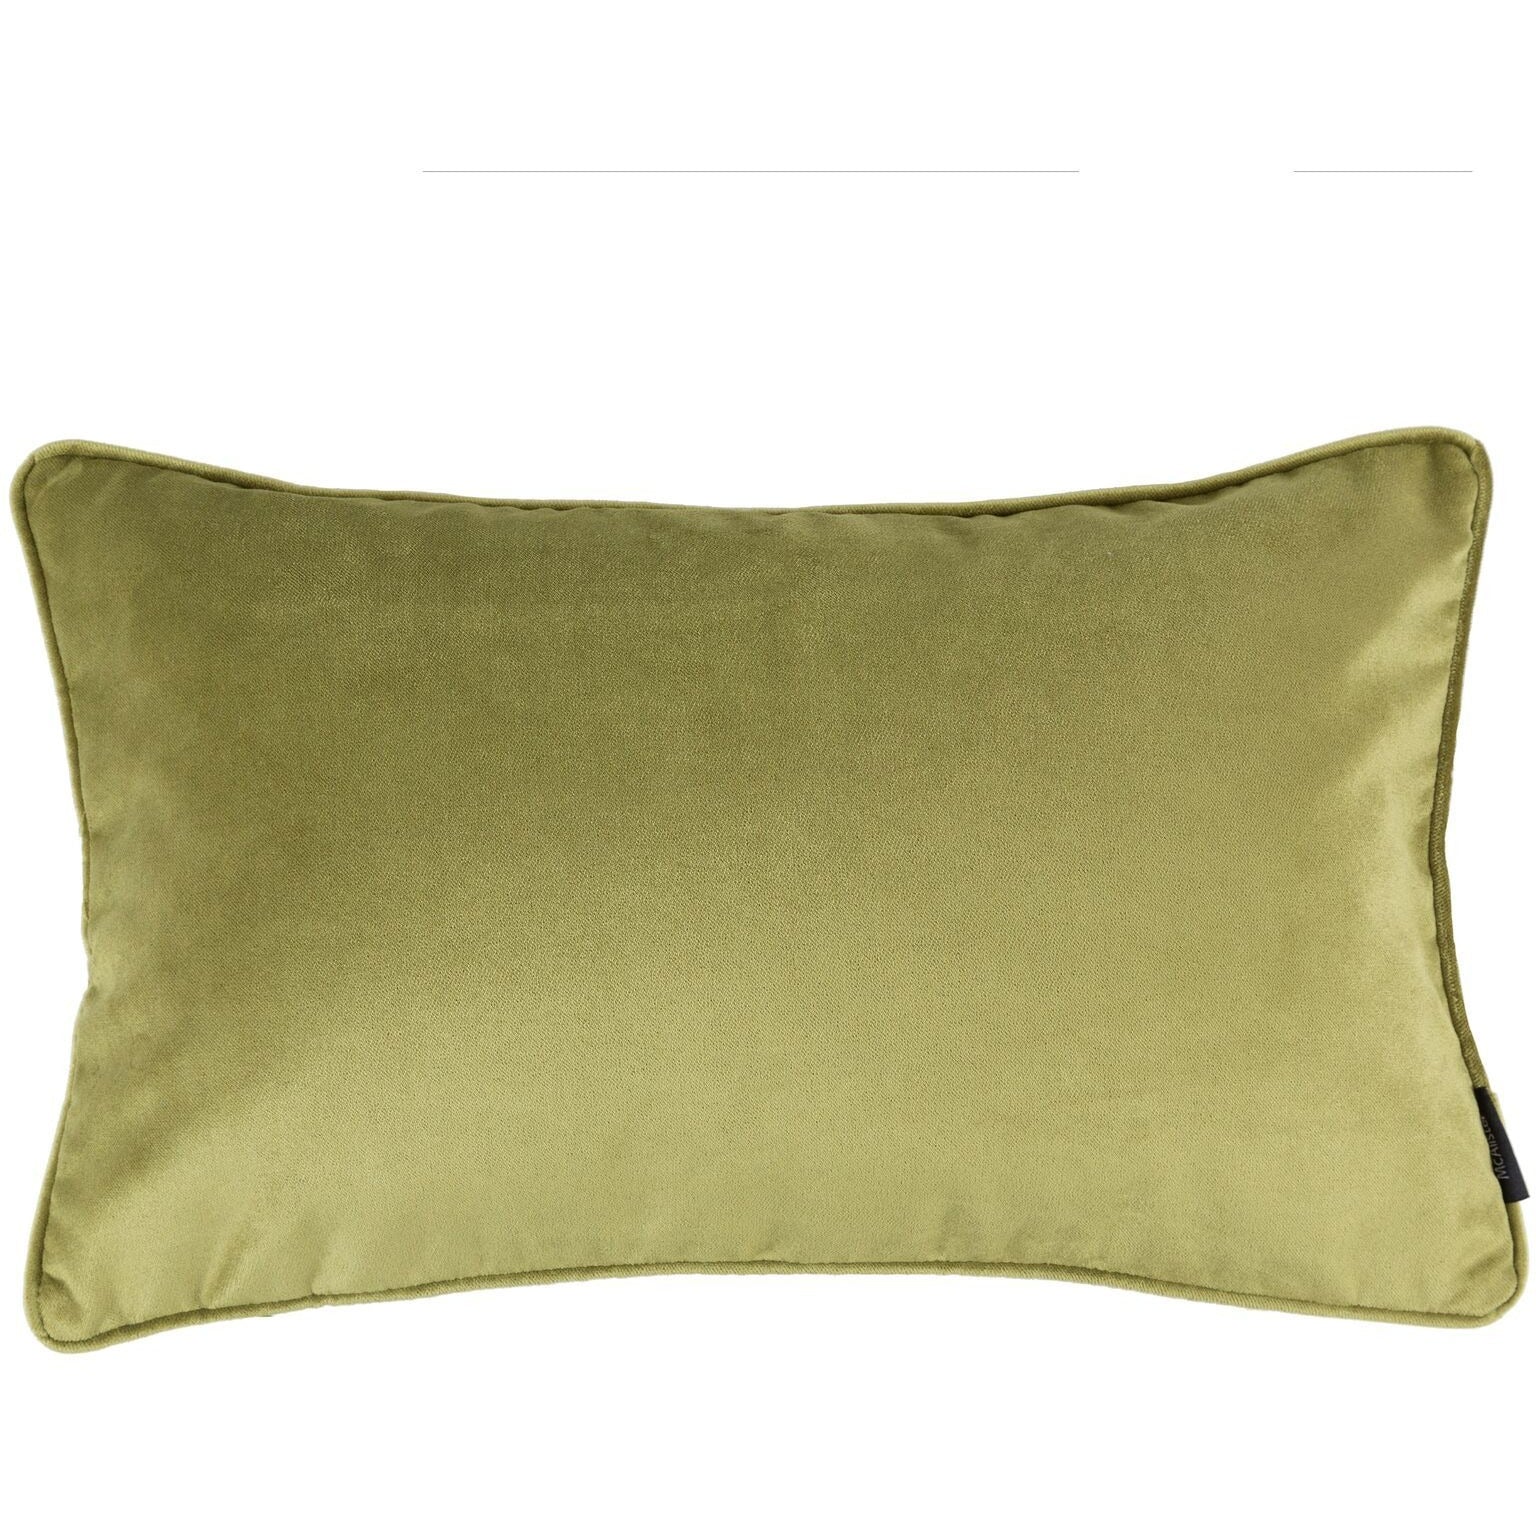 McAlister Textiles Matt Lime Green Piped Velvet Pillow Pillow Cover Only 50cm x 30cm 